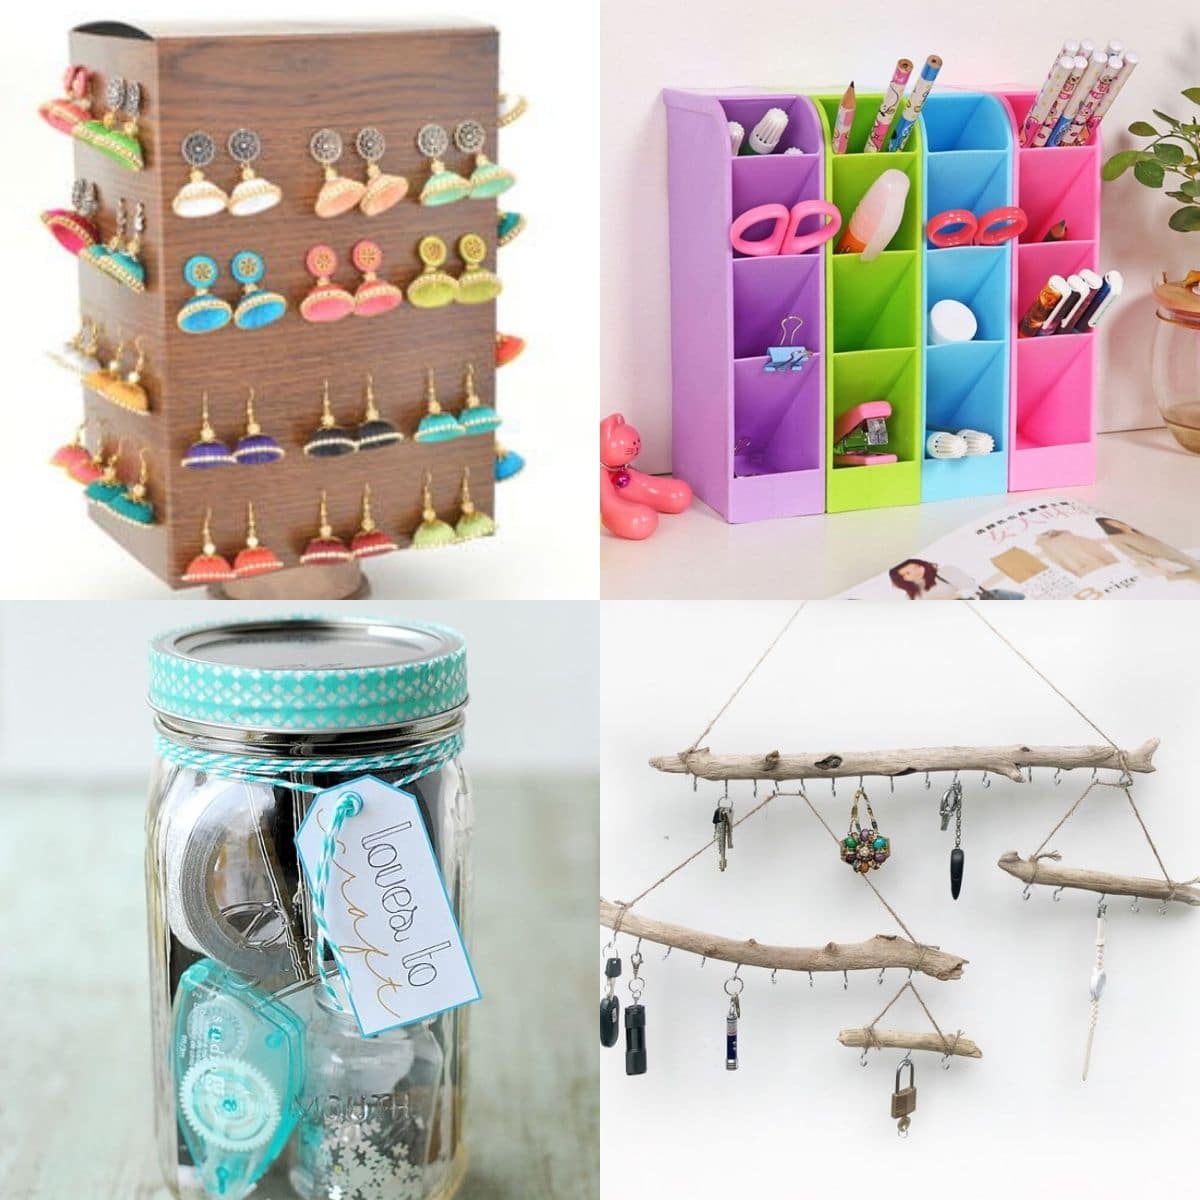 15 Creative Ways to Organize Small Items - Craftsy Hacks